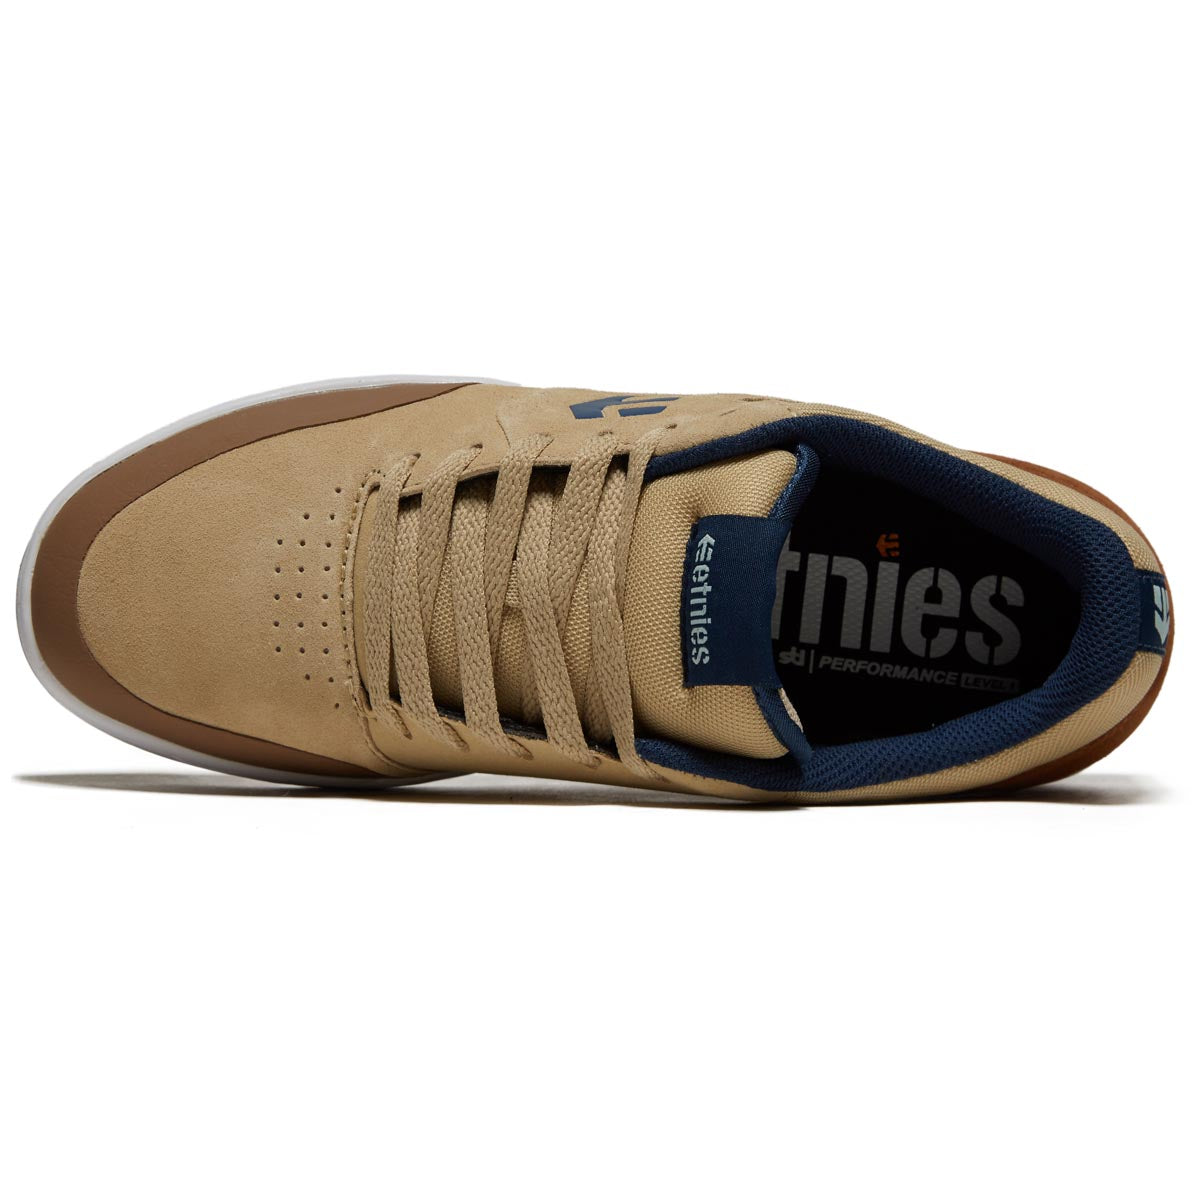 Etnies Marana Shoes - Brown/Tan/Blue image 3